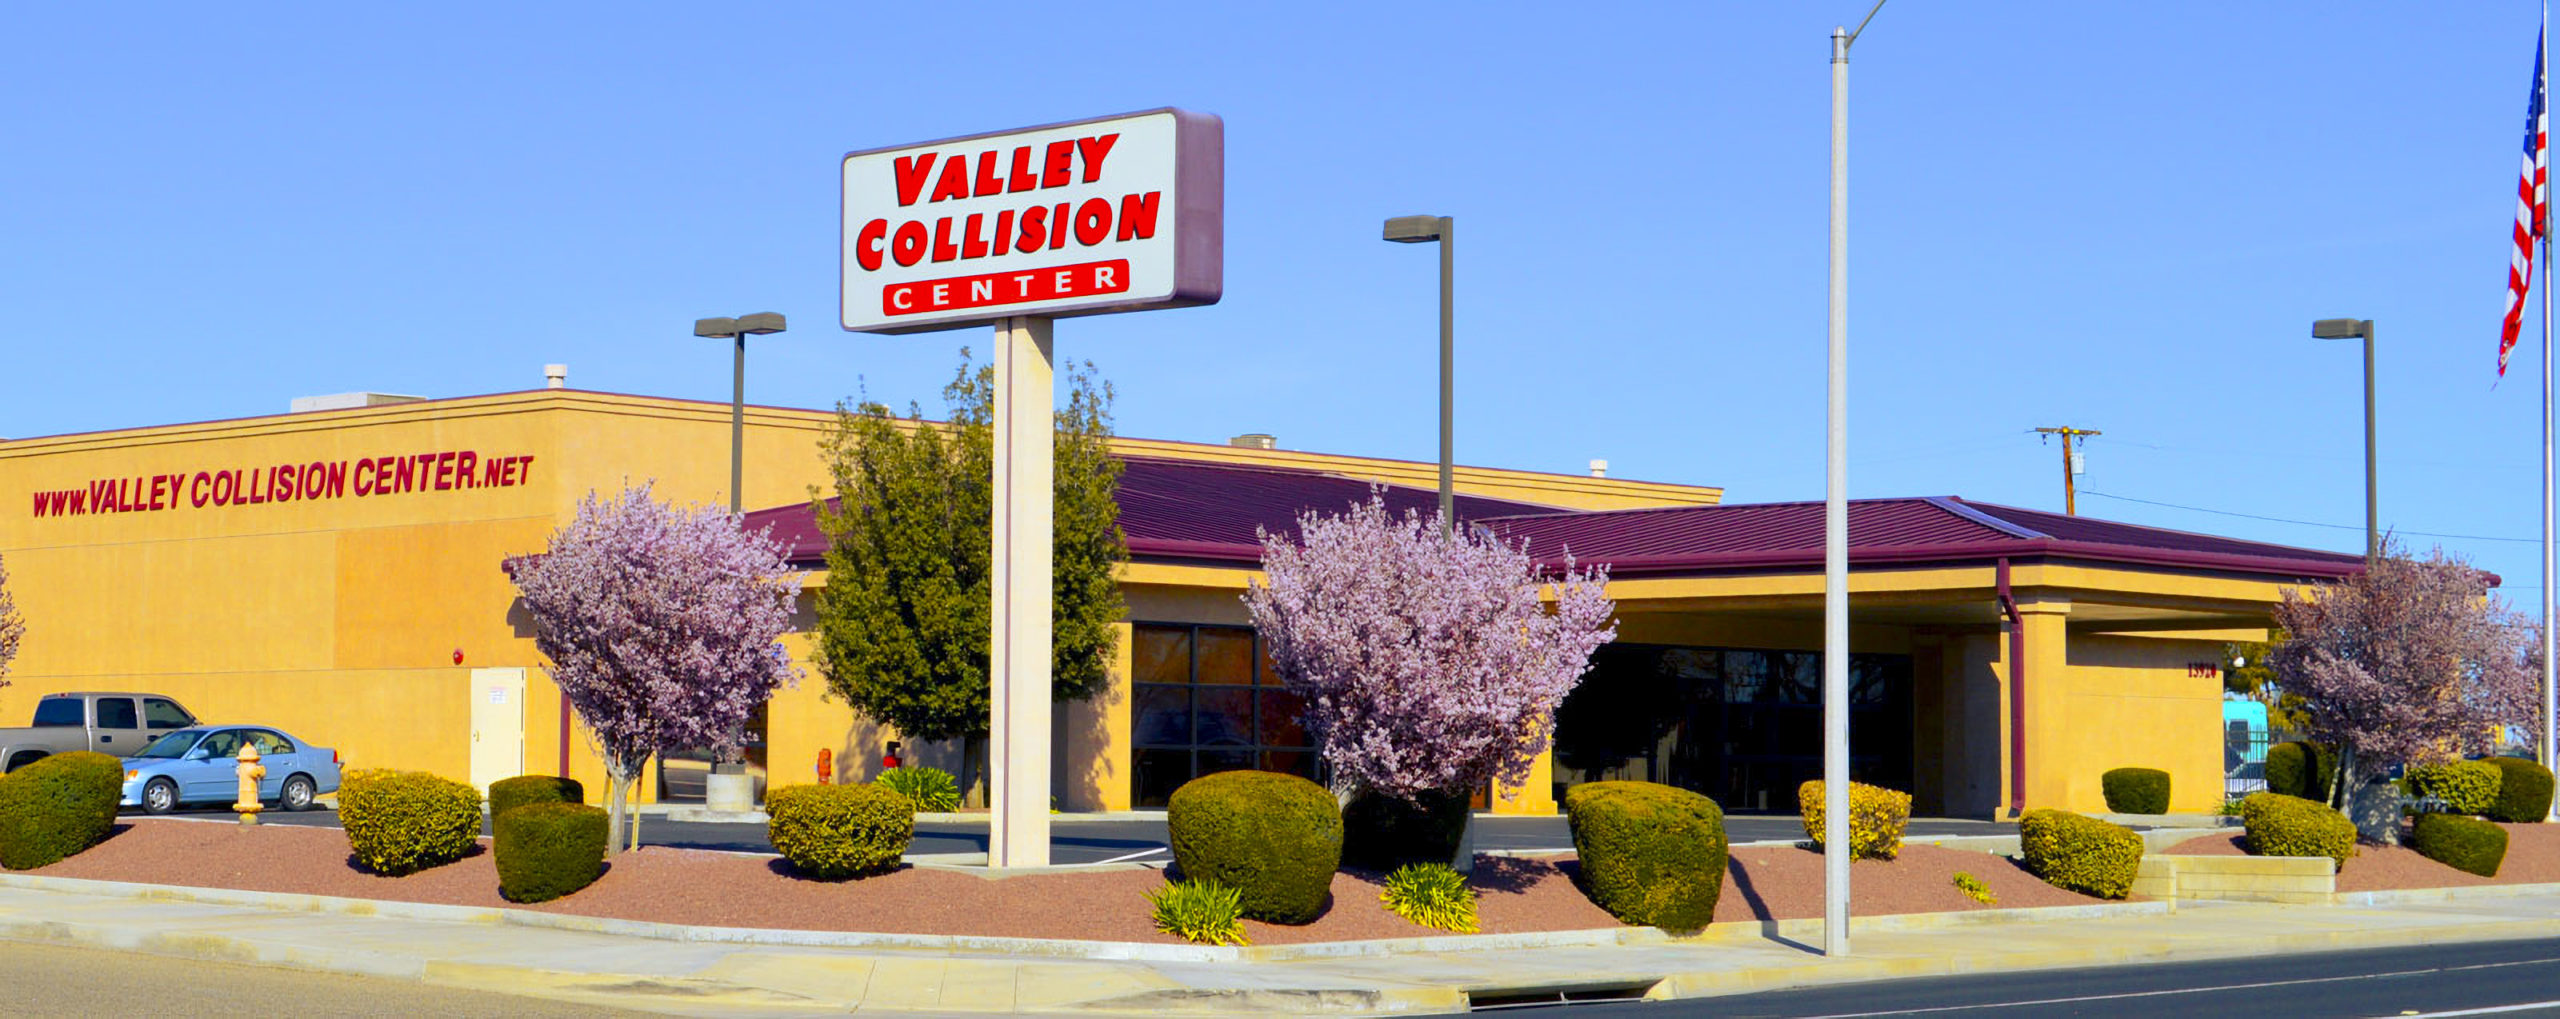 valley collision center building